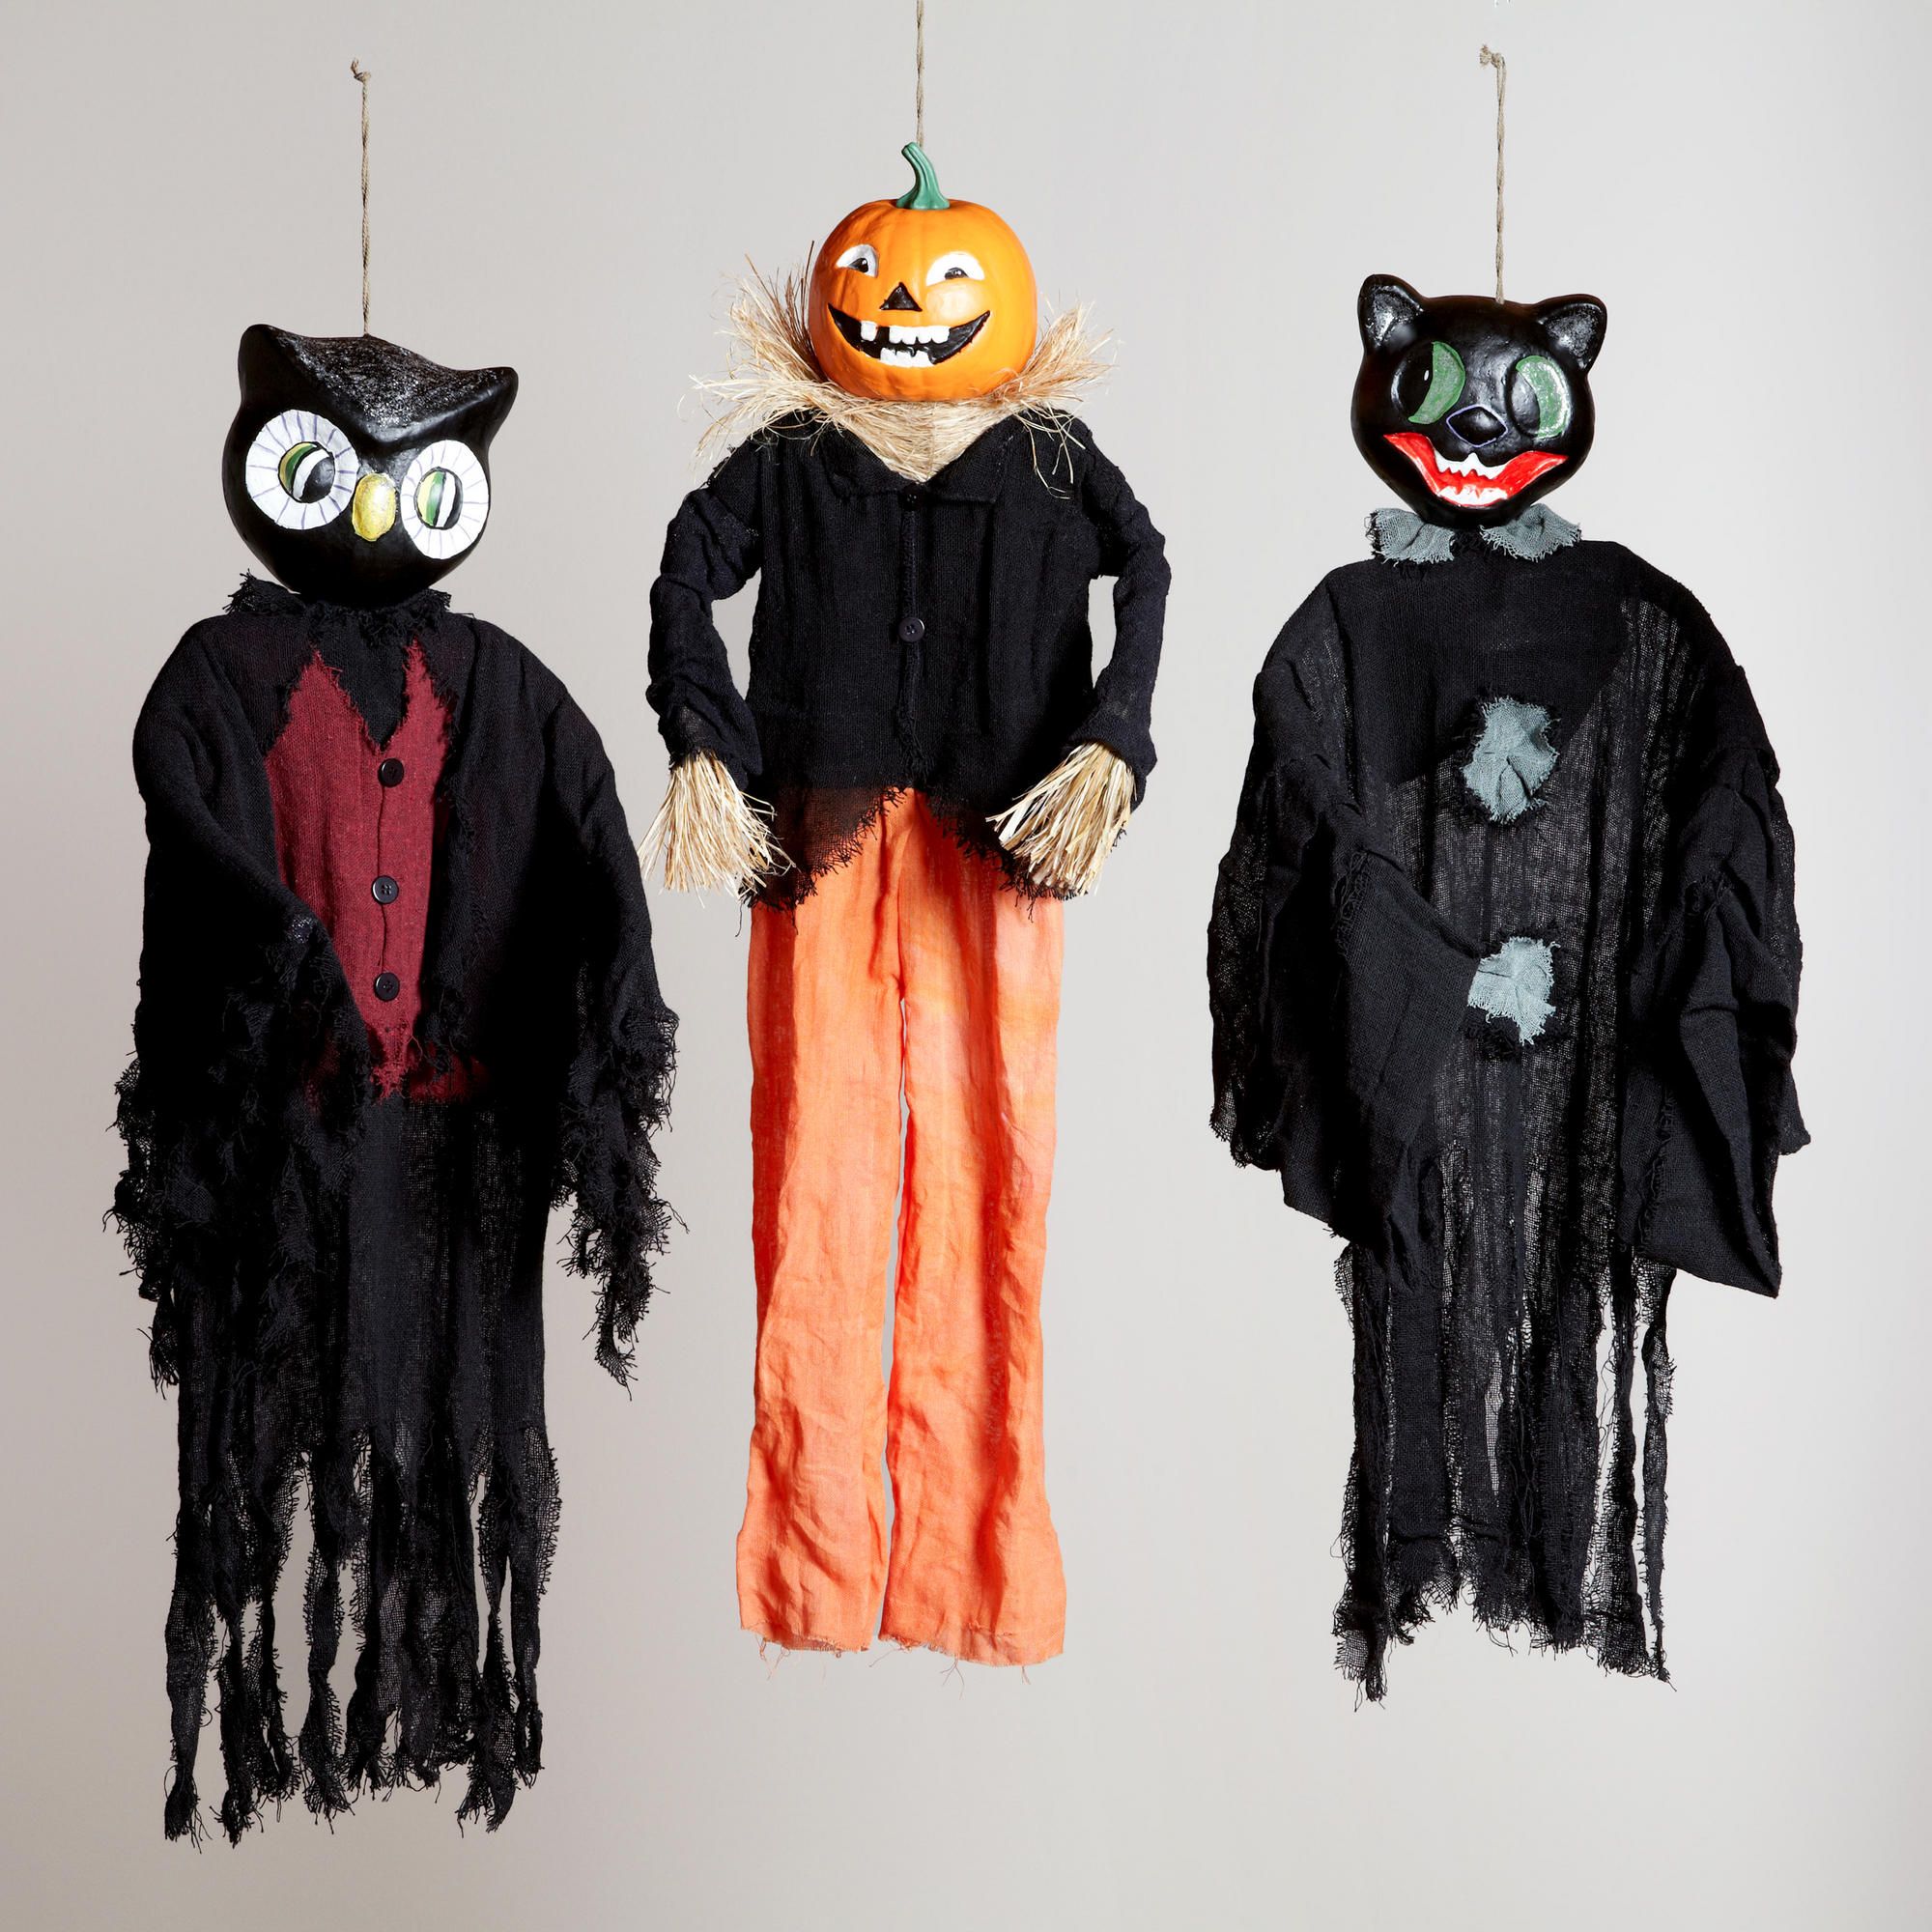 Vintage-Inspired Halloween Figures, Set of 3 | World Market ...